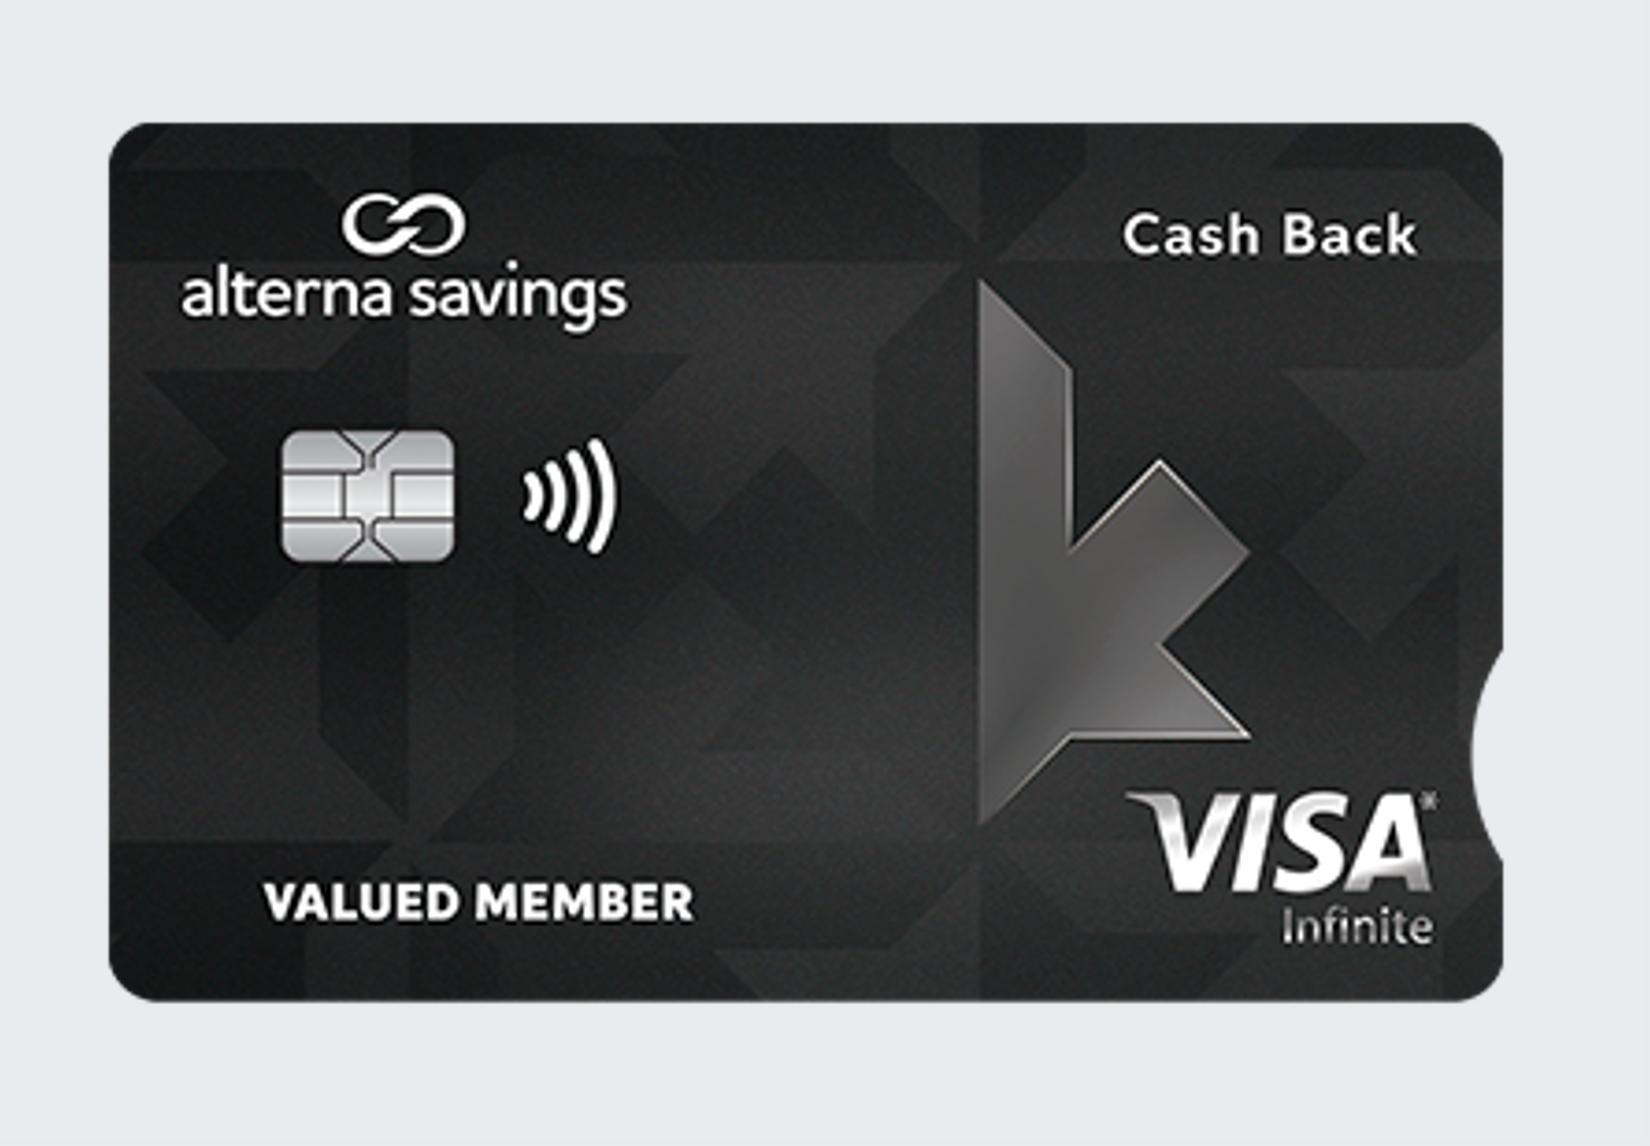 cash back infinite credit card image